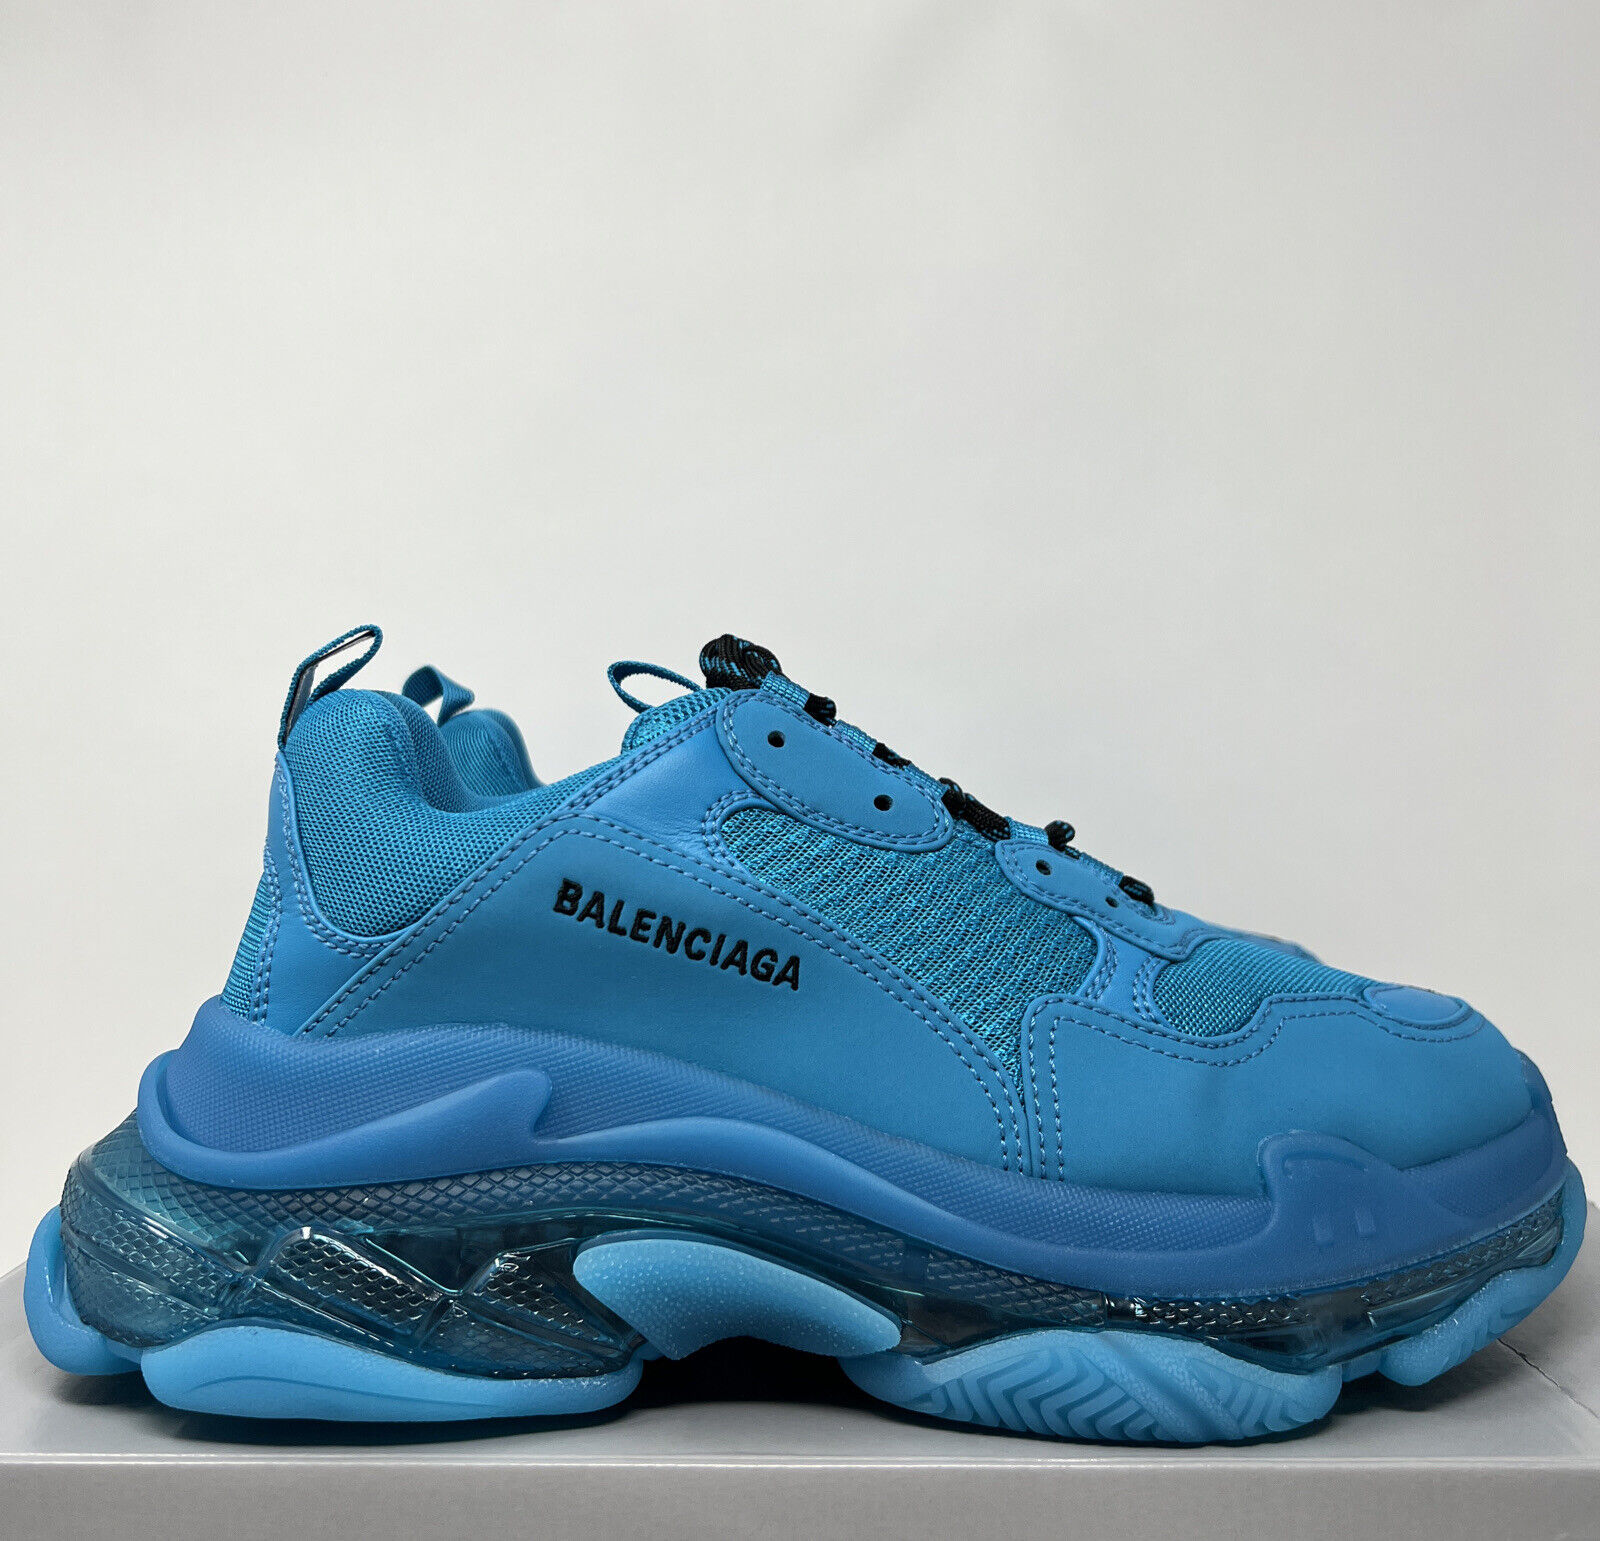 Balenciaga Triple S Men's Sneakers Size 43 EU / 10 US Blue Clear Sole | eBay